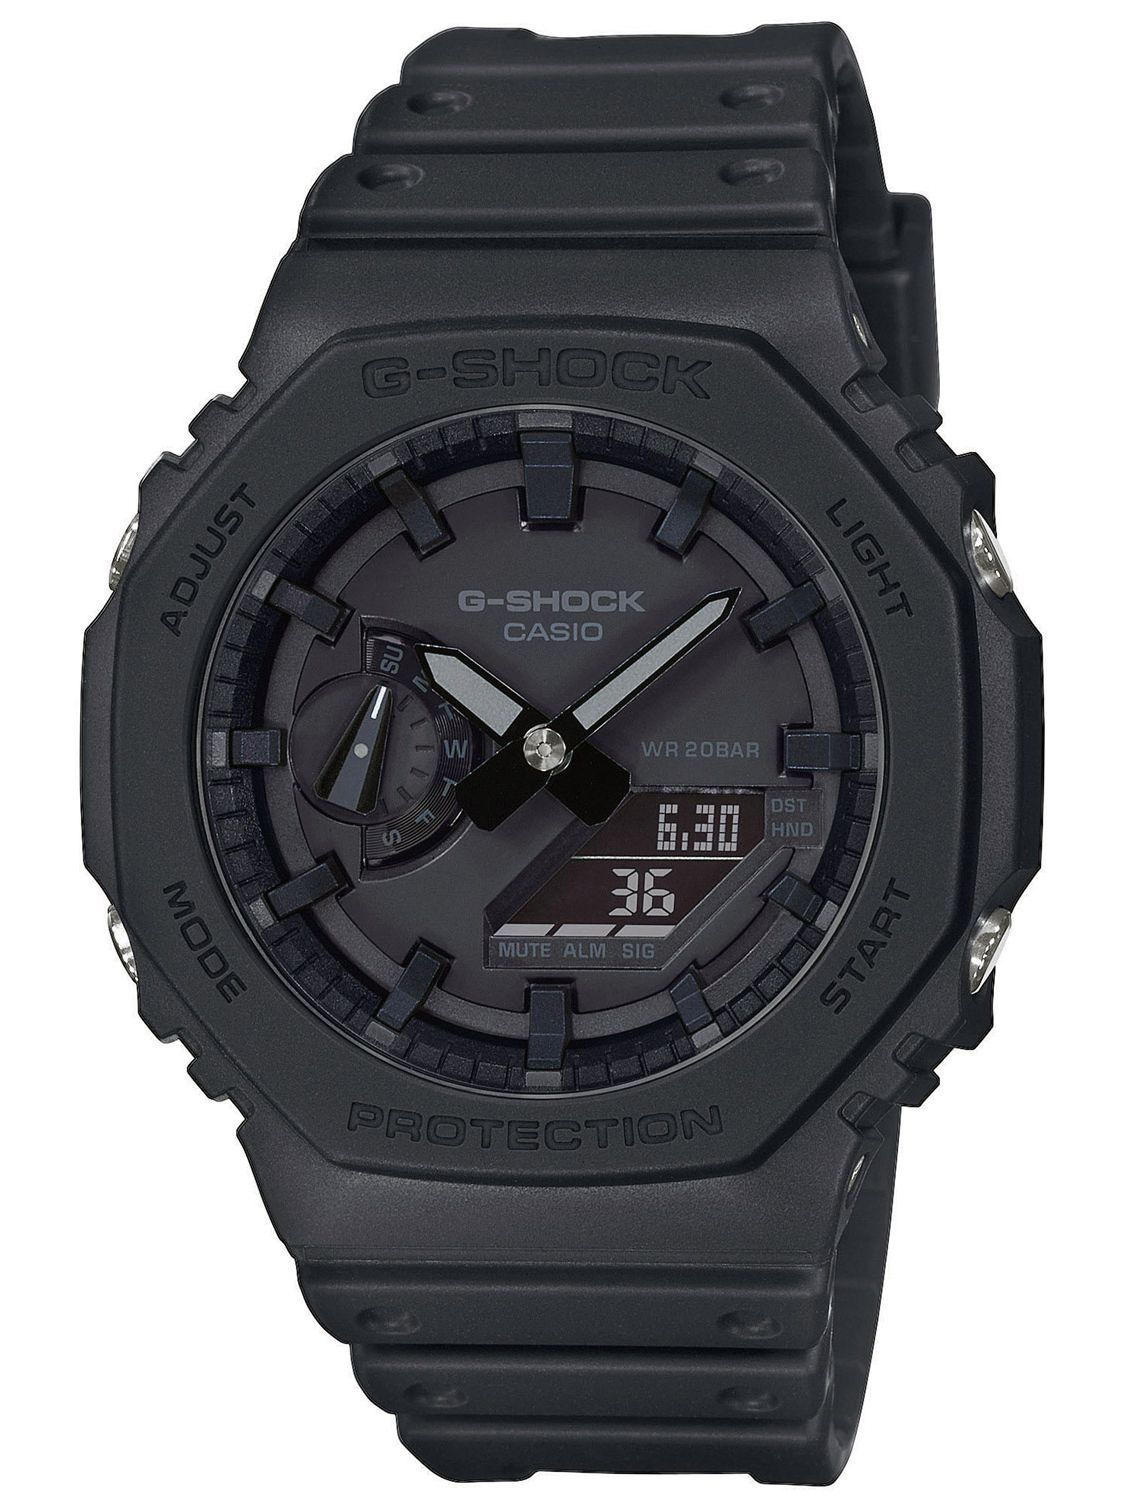 Reloj G-SHOCK modelo GG-B100-1AER marca Casio Hombre — Watches All Time